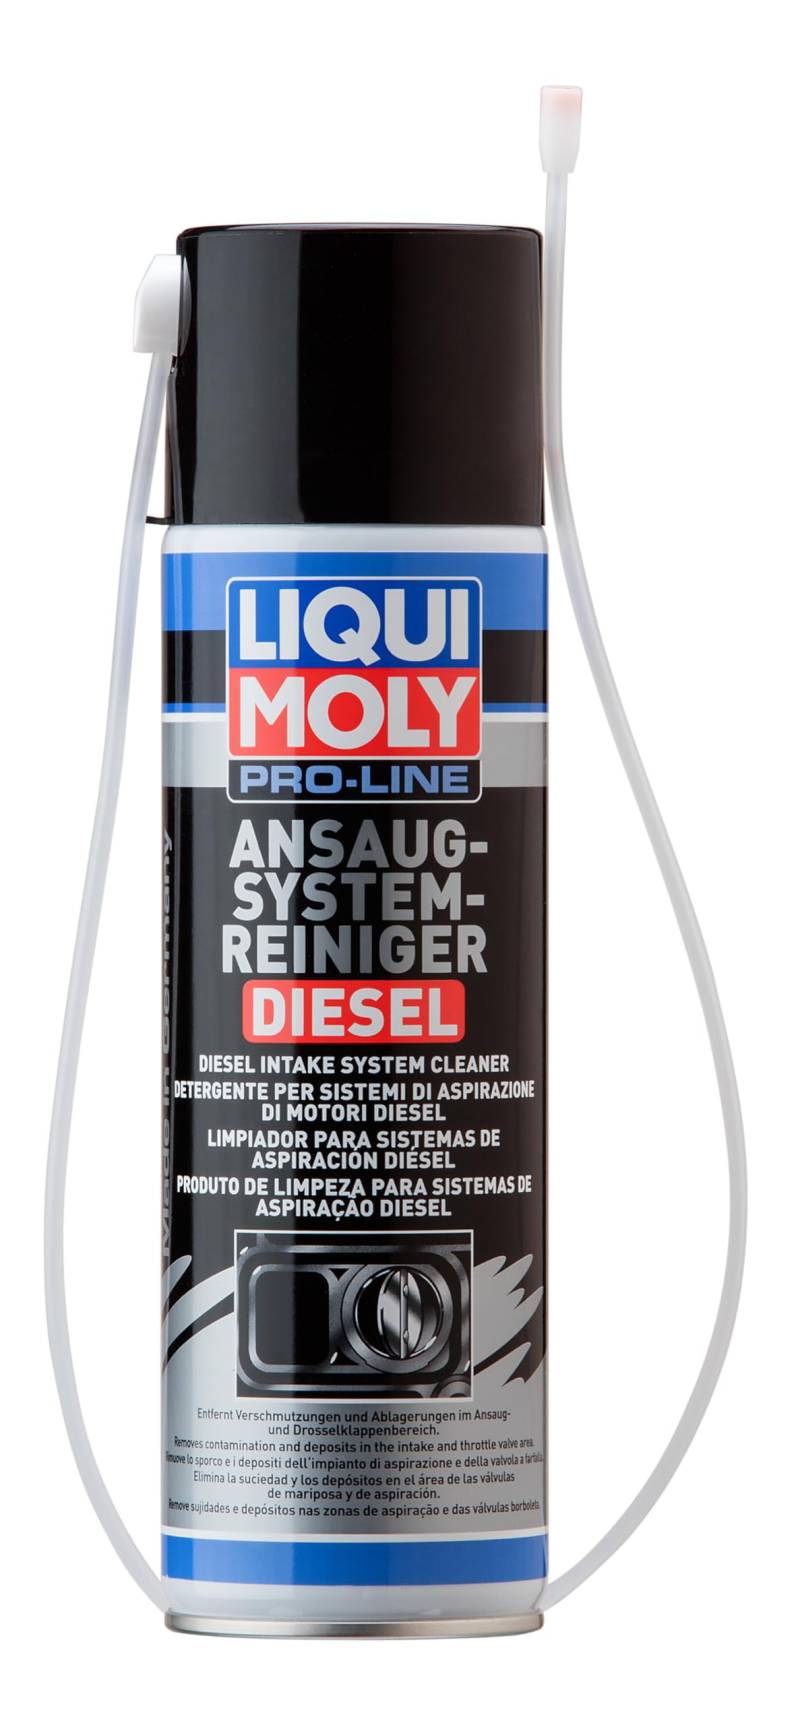 LIQUI MOLY Pro-Line Ansaugsystemreiniger Diesel | 400 ml | Werkstattprodukt | Art.-Nr.: 5168 von Liqui Moly